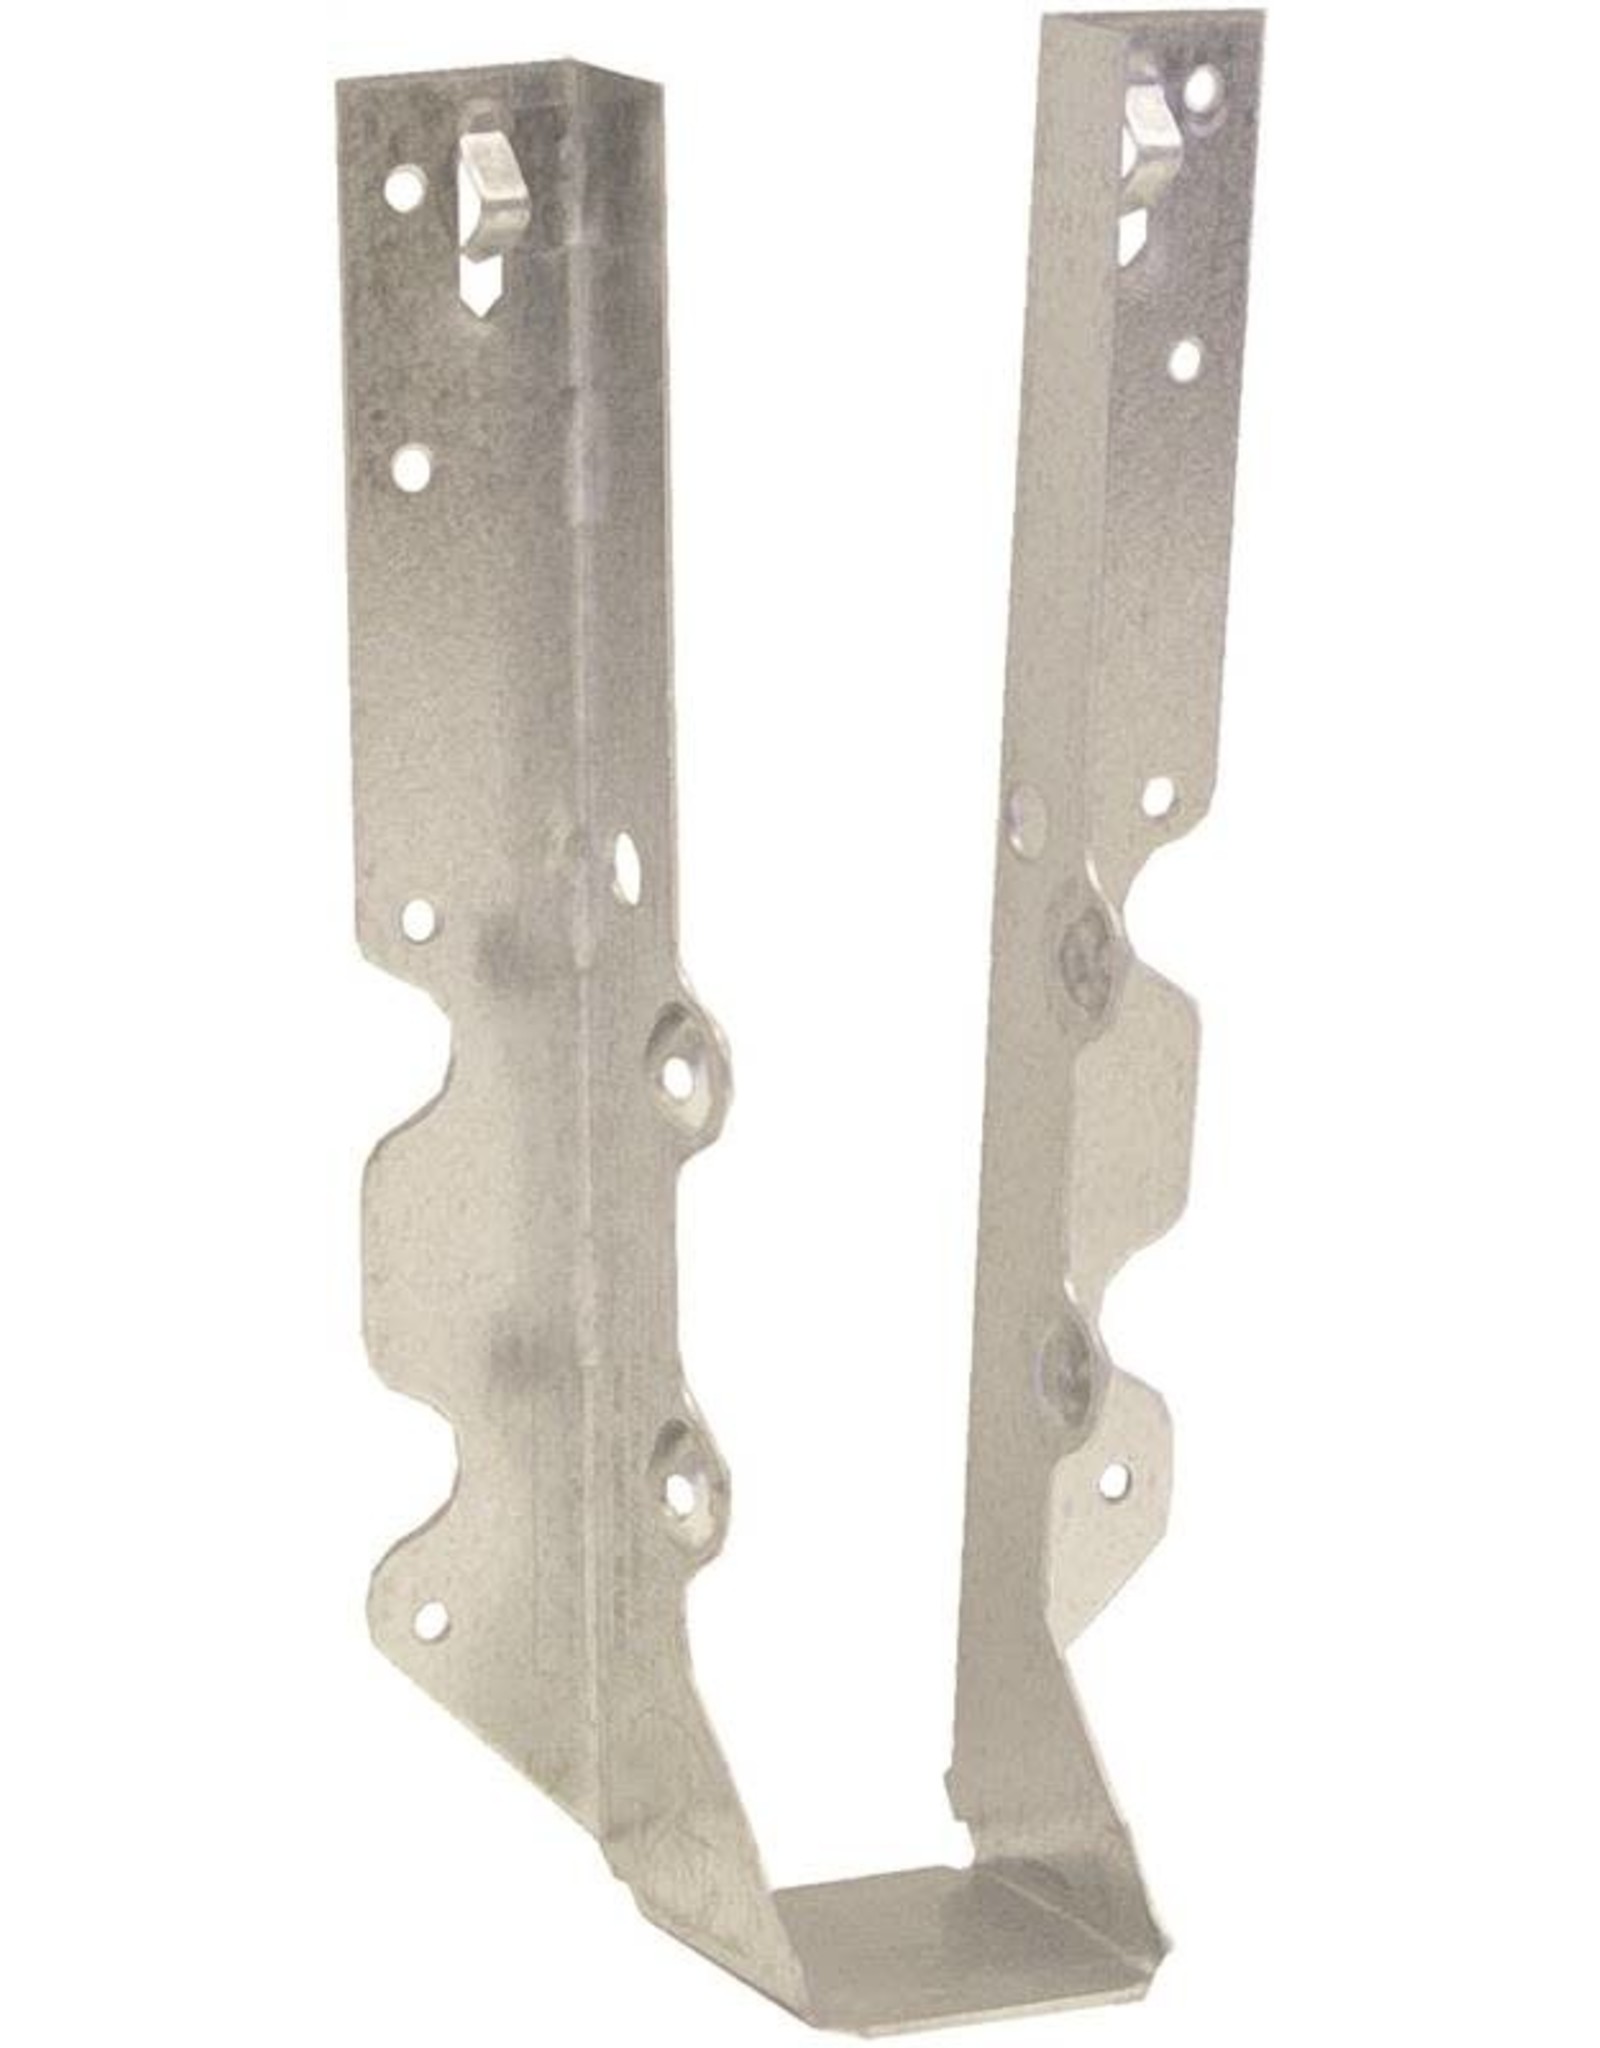 MiTek MiTek JUS210 Slant Joist Hanger, 7-3/4 in H, 1-3/4 in D, 1-9/16 in W, 2 in x 10 to 12 in, Steel, G90 Galvanized